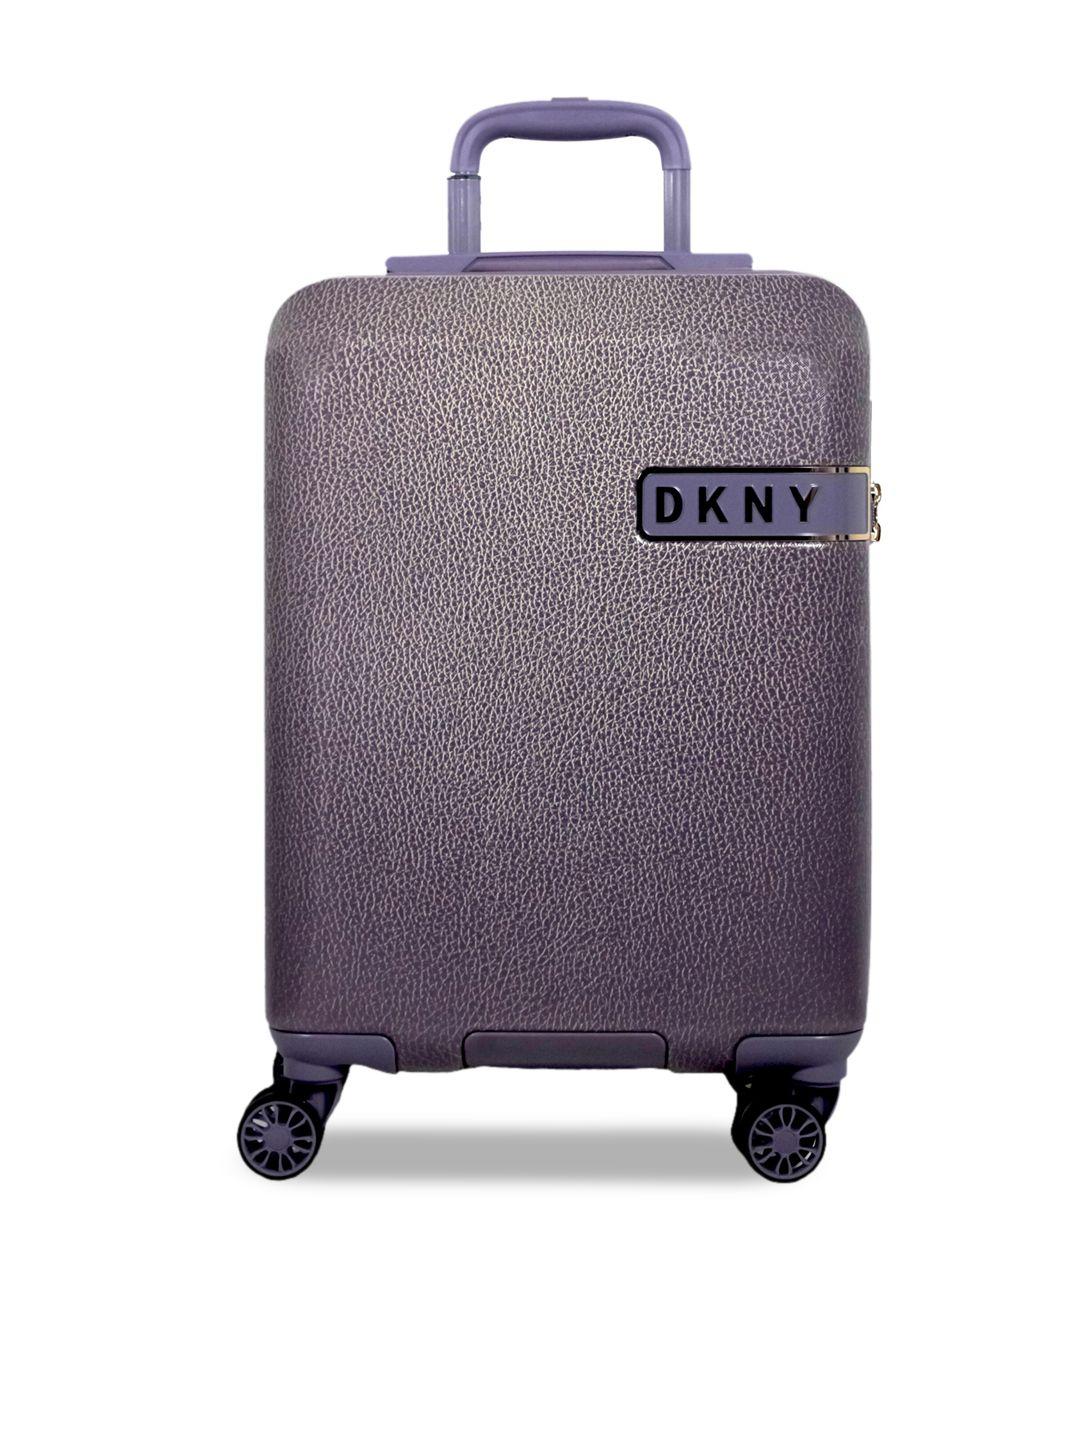 dkny violet luggage rapture hard trolley with flush mount tsa lock